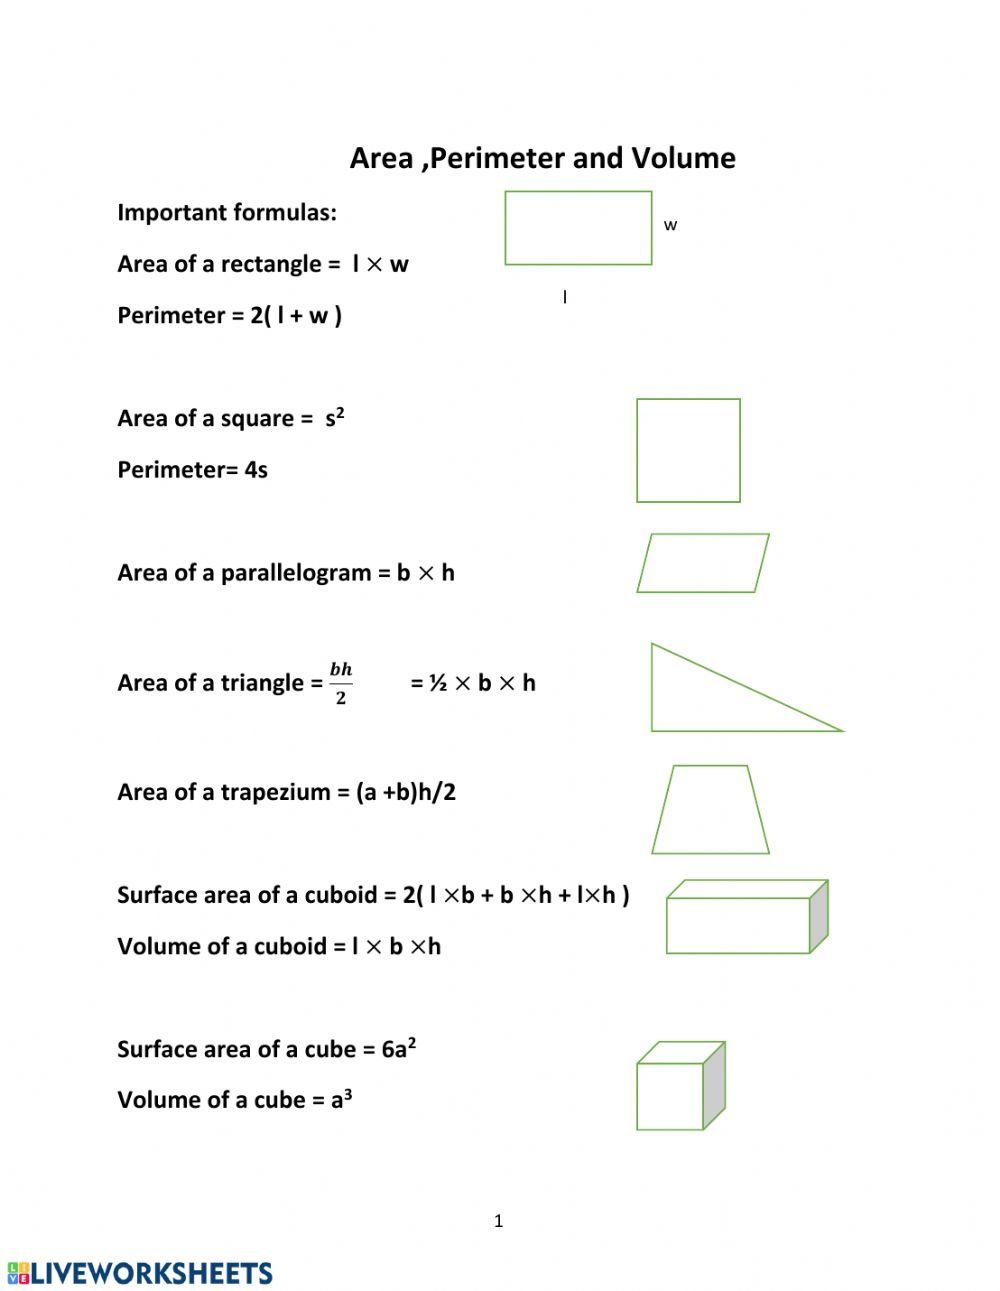 Area Perimeter and Volume